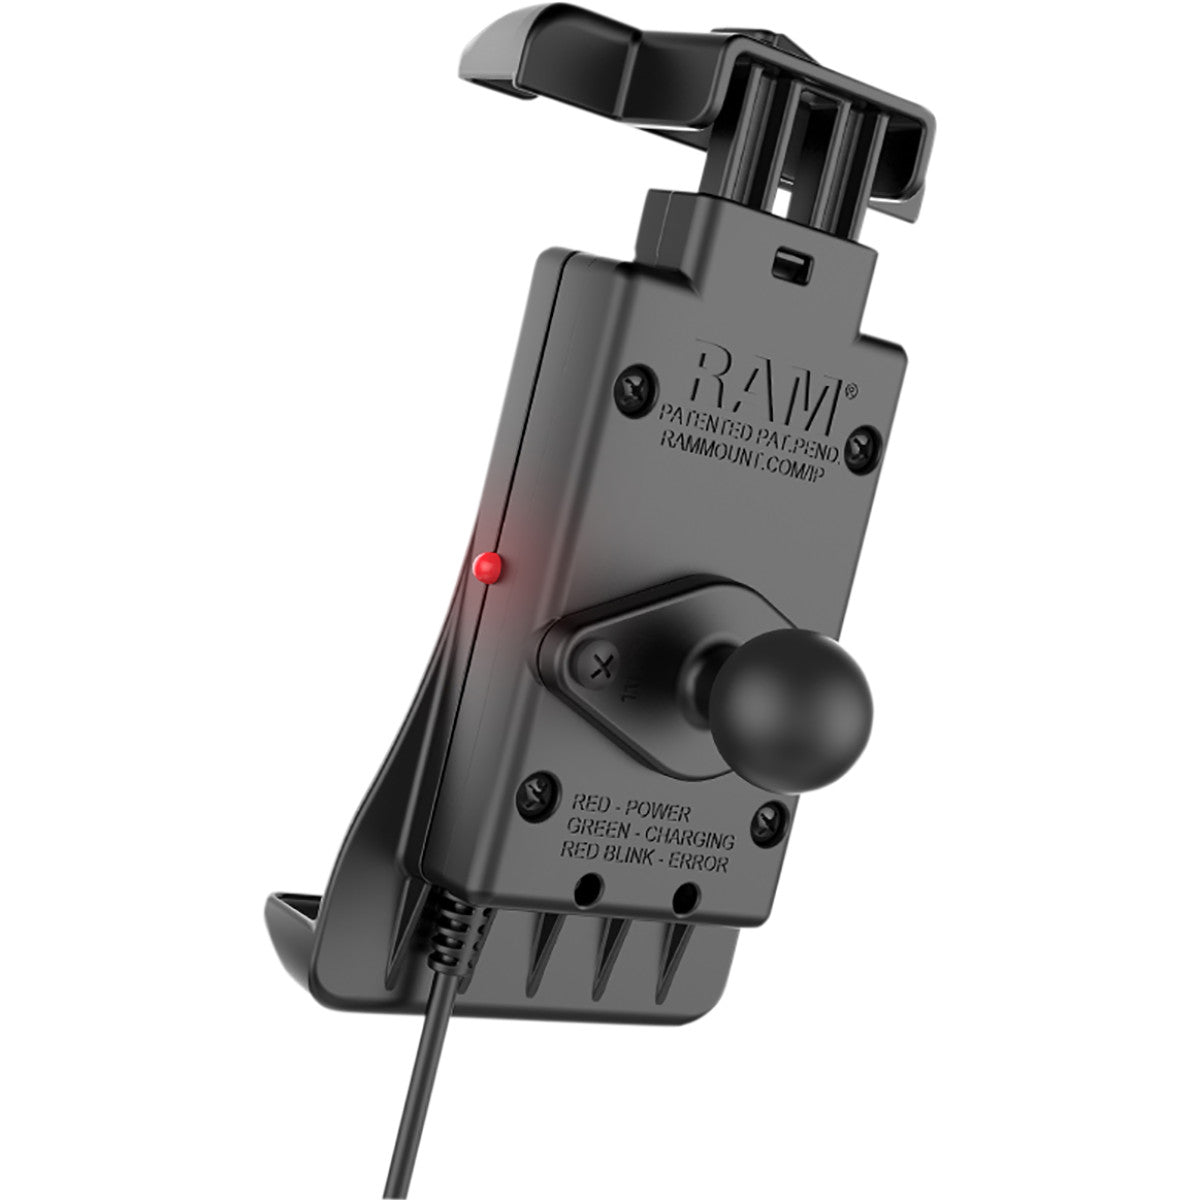 Ram Quick-Grip™ Waterproof Wireless Charging Holders